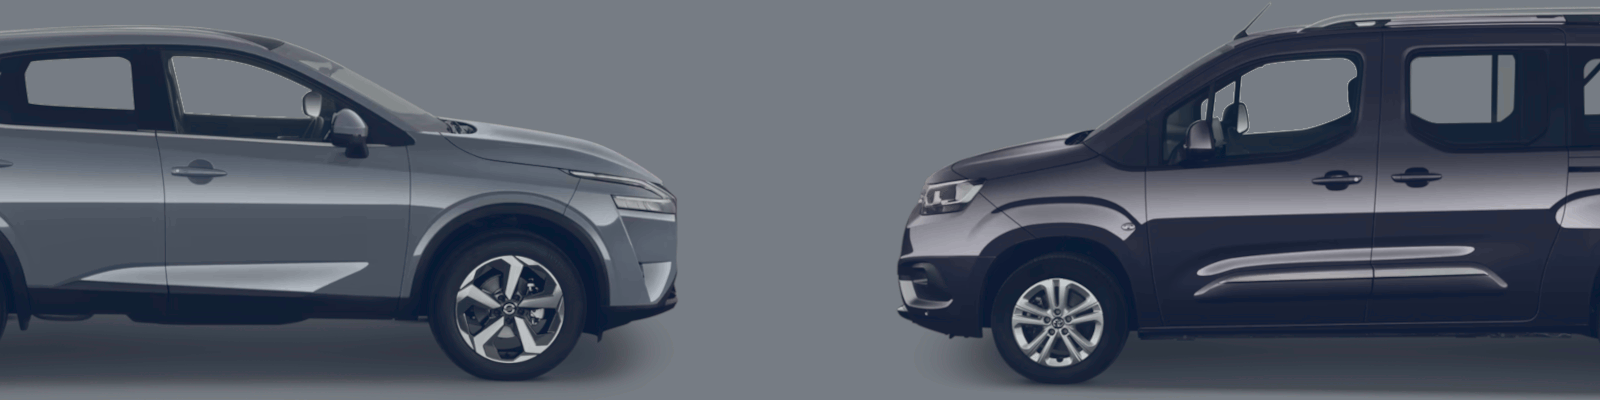 SUV vs. Van